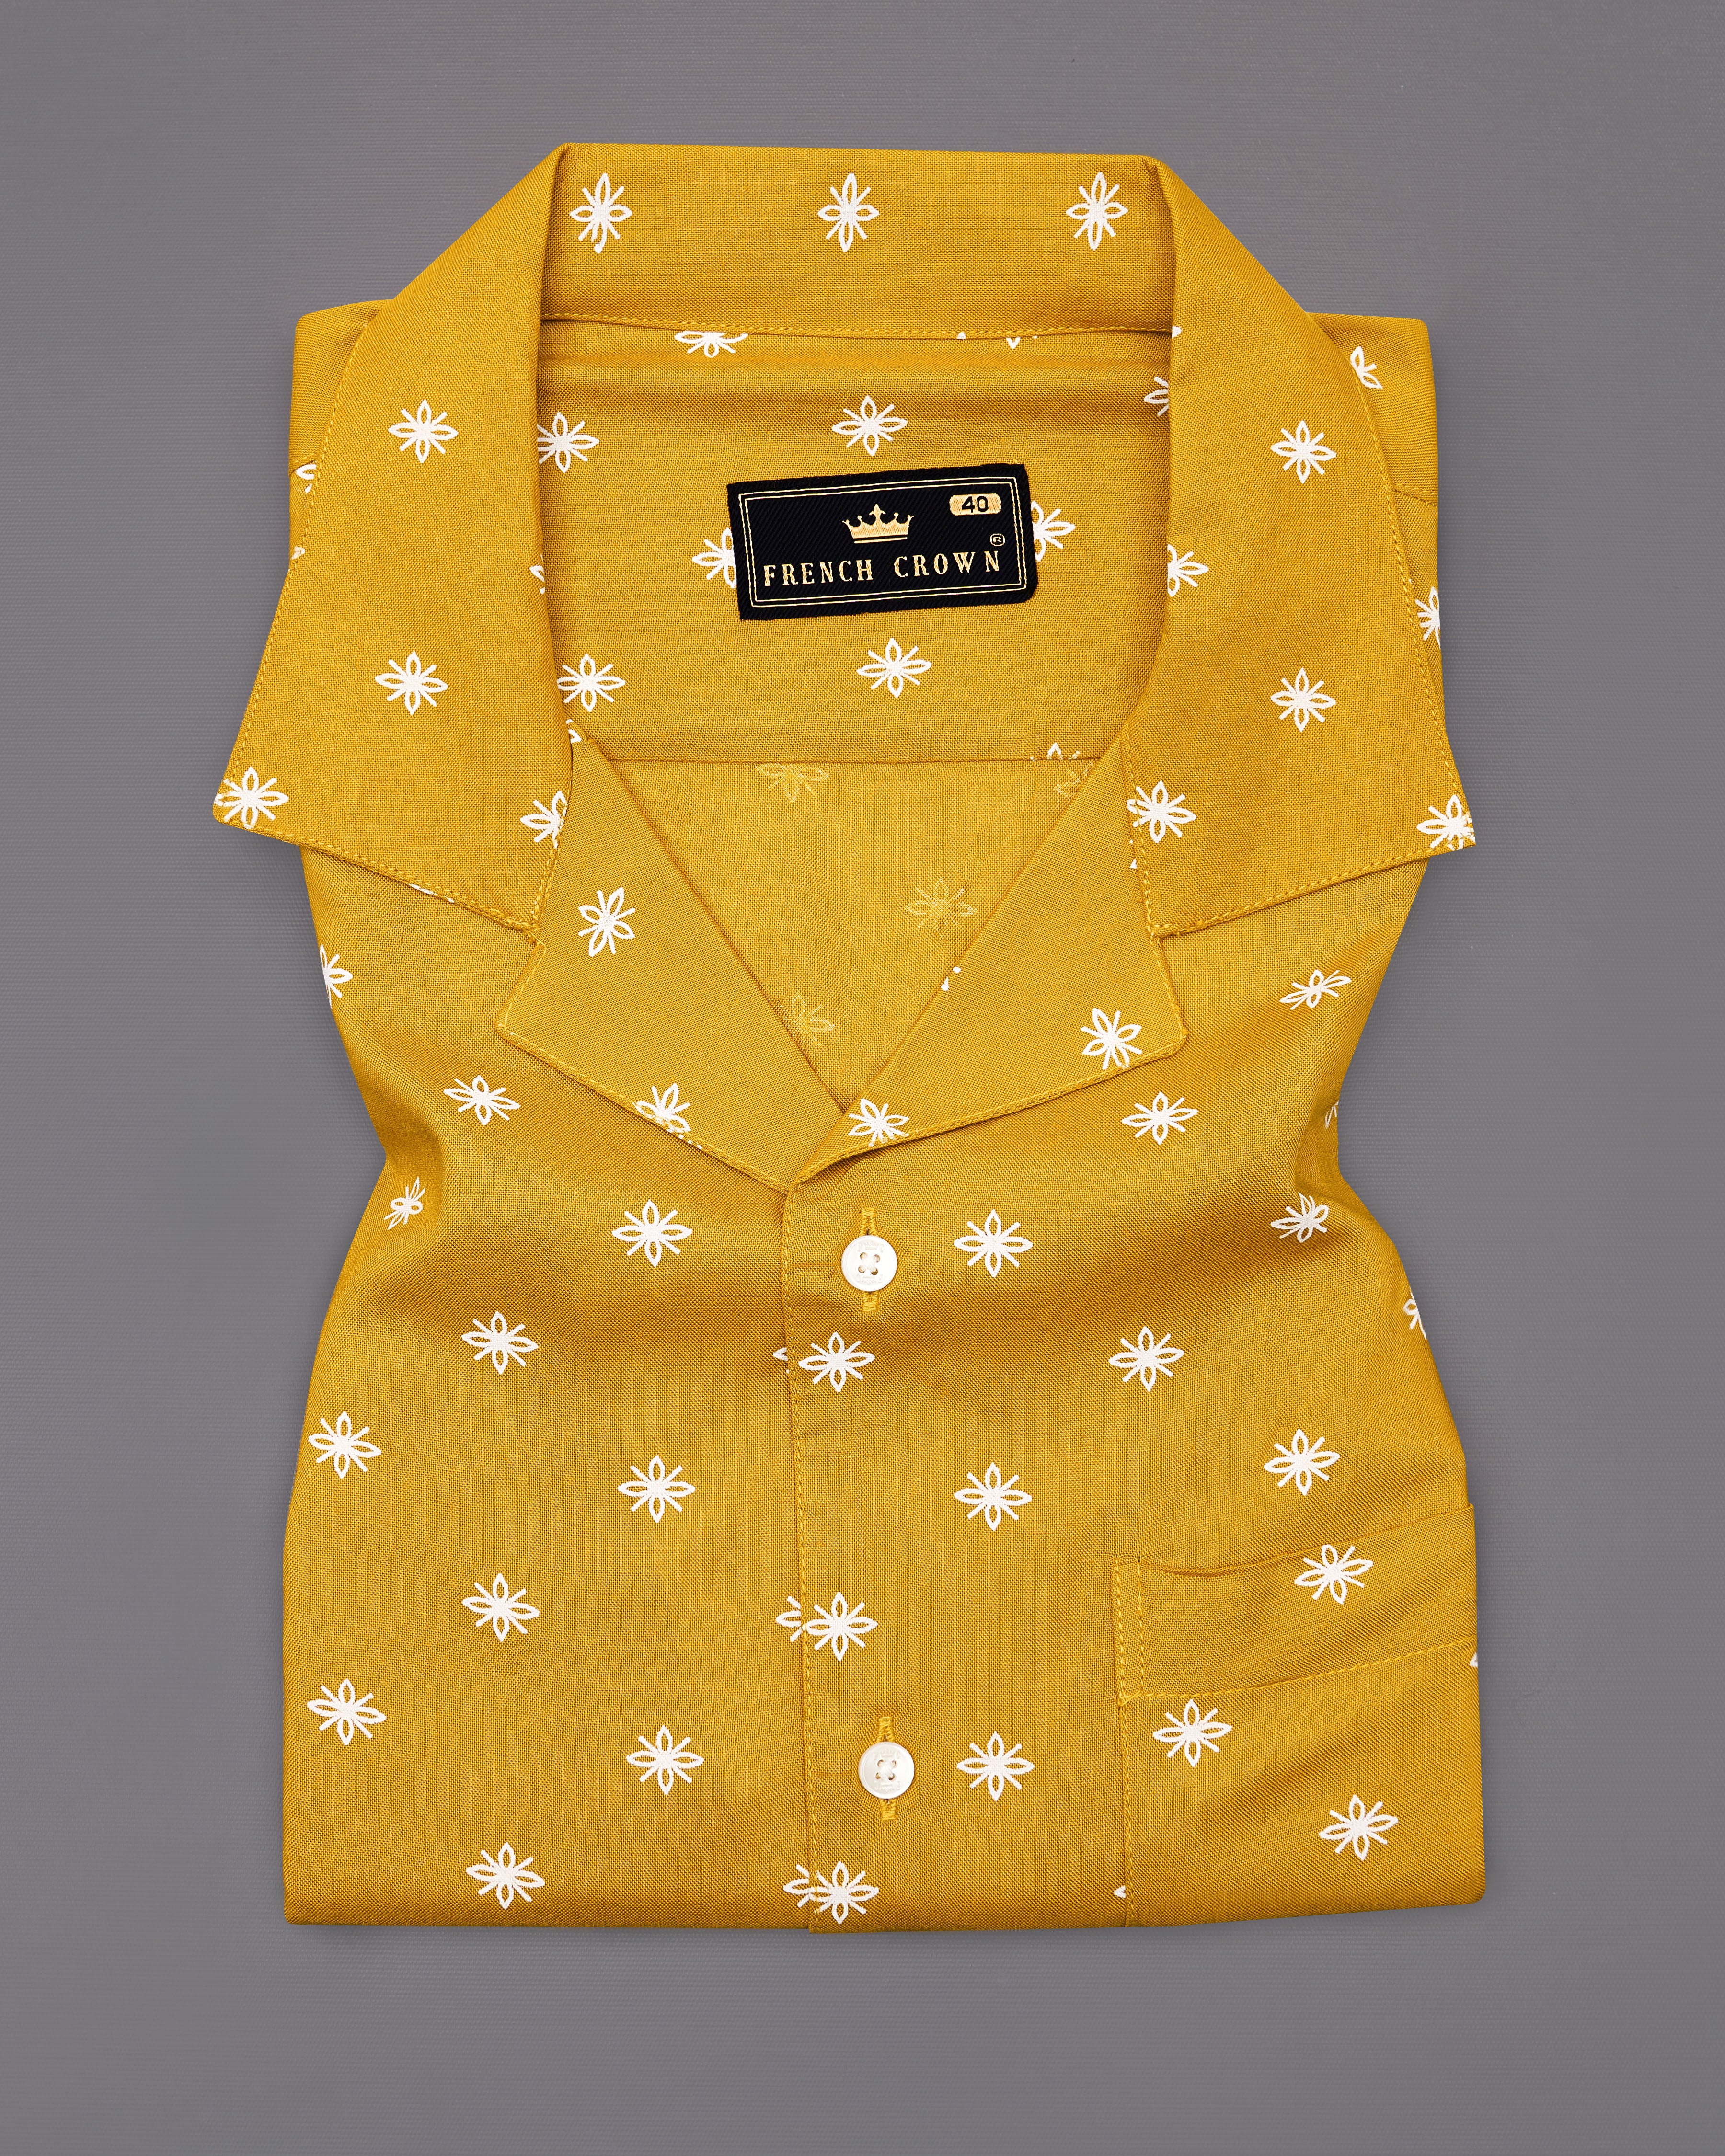 Fire Bush Yellow Textured Premium Tencel Shirt 9357-CC-SS-H-38, 9357-CC-SS-H-39, 9357-CC-SS-H-40, 9357-CC-SS-H-42, 9357-CC-SS-H-44, 9357-CC-SS-H-46, 9357-CC-SS-H-48, 9357-CC-SS-H-50,  9357-CC-SS-H-52